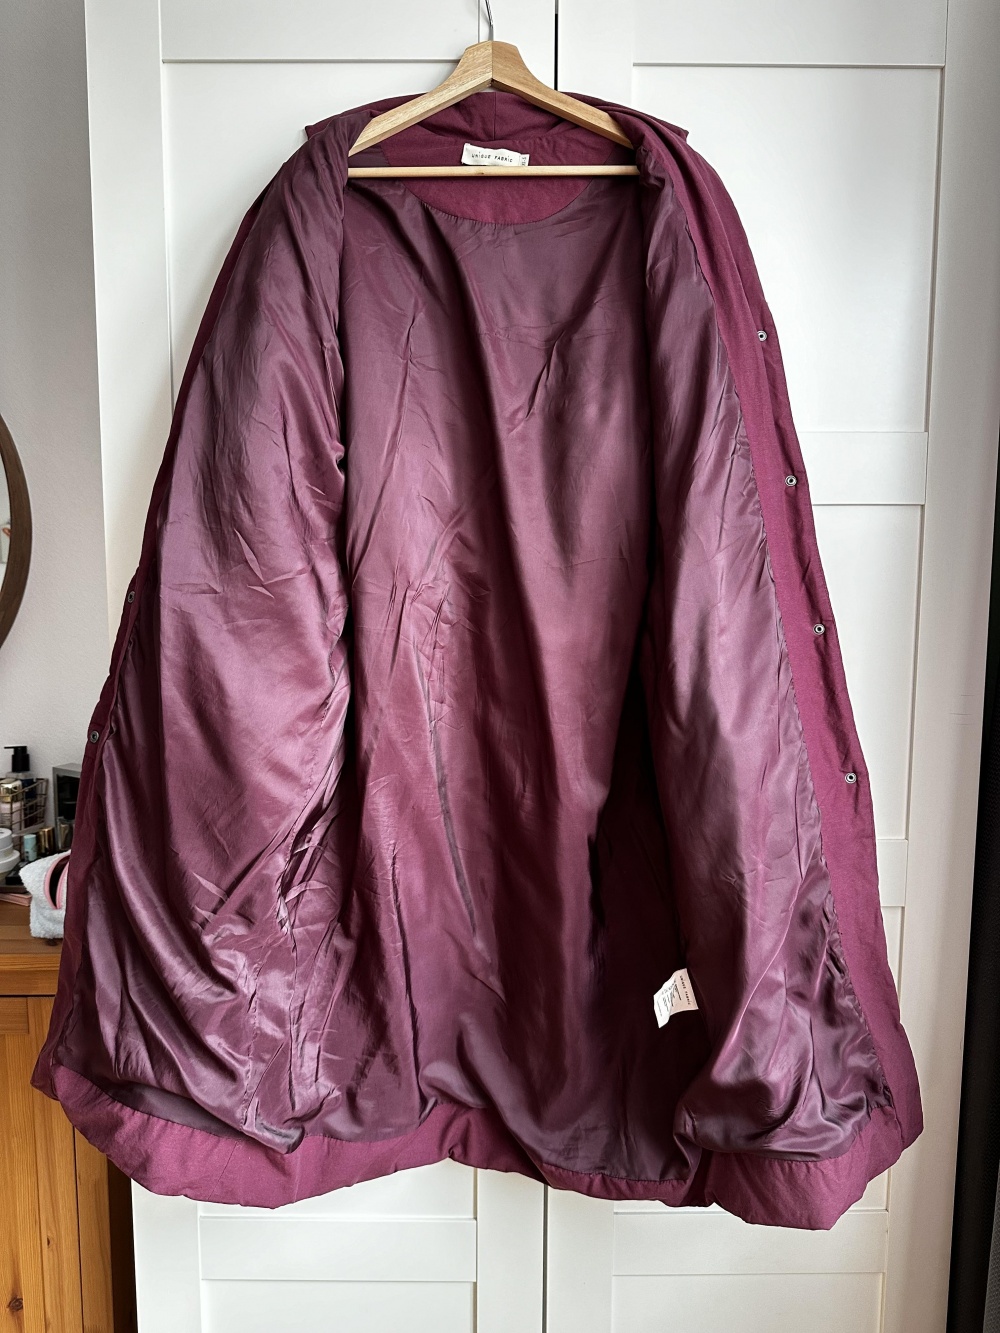 Пальто Unique fabric, размер S